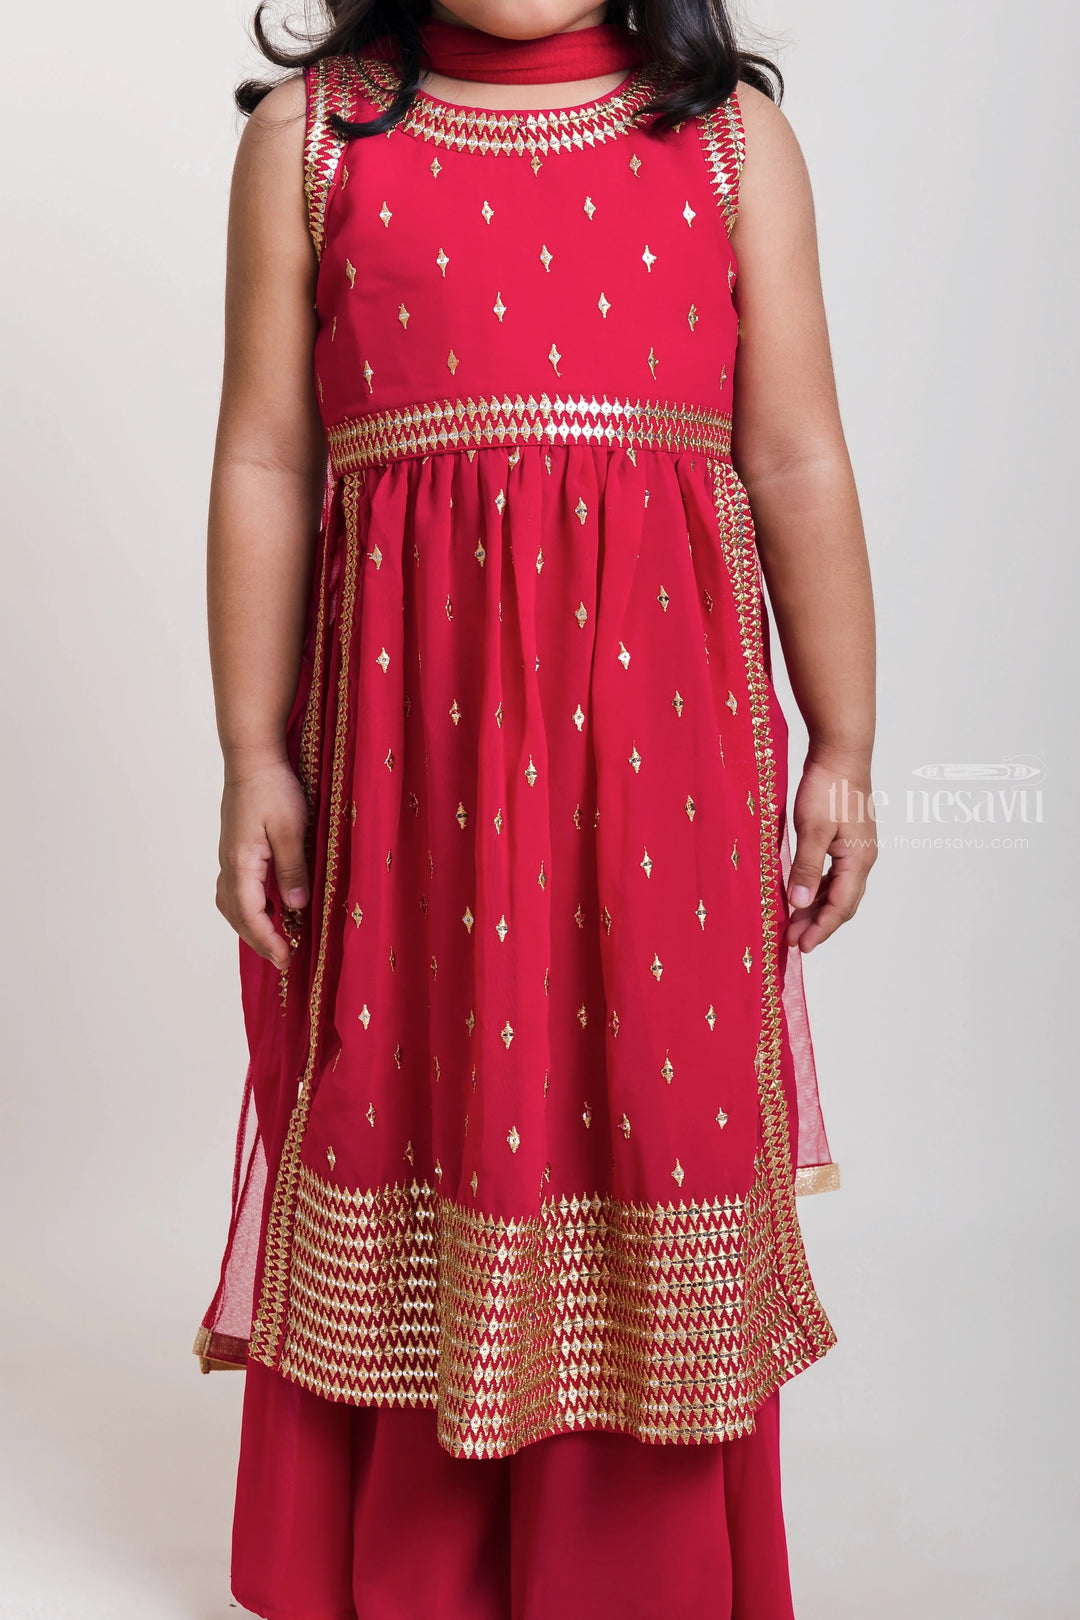 The Nesavu Girls Sharara / Plazo Set Designer Red Kurti Suit With Palazzo Pants For Little Girls Nesavu Dynamic Red Kurti And Palazzo Pants For Girls| Best Collection| The Nesavu